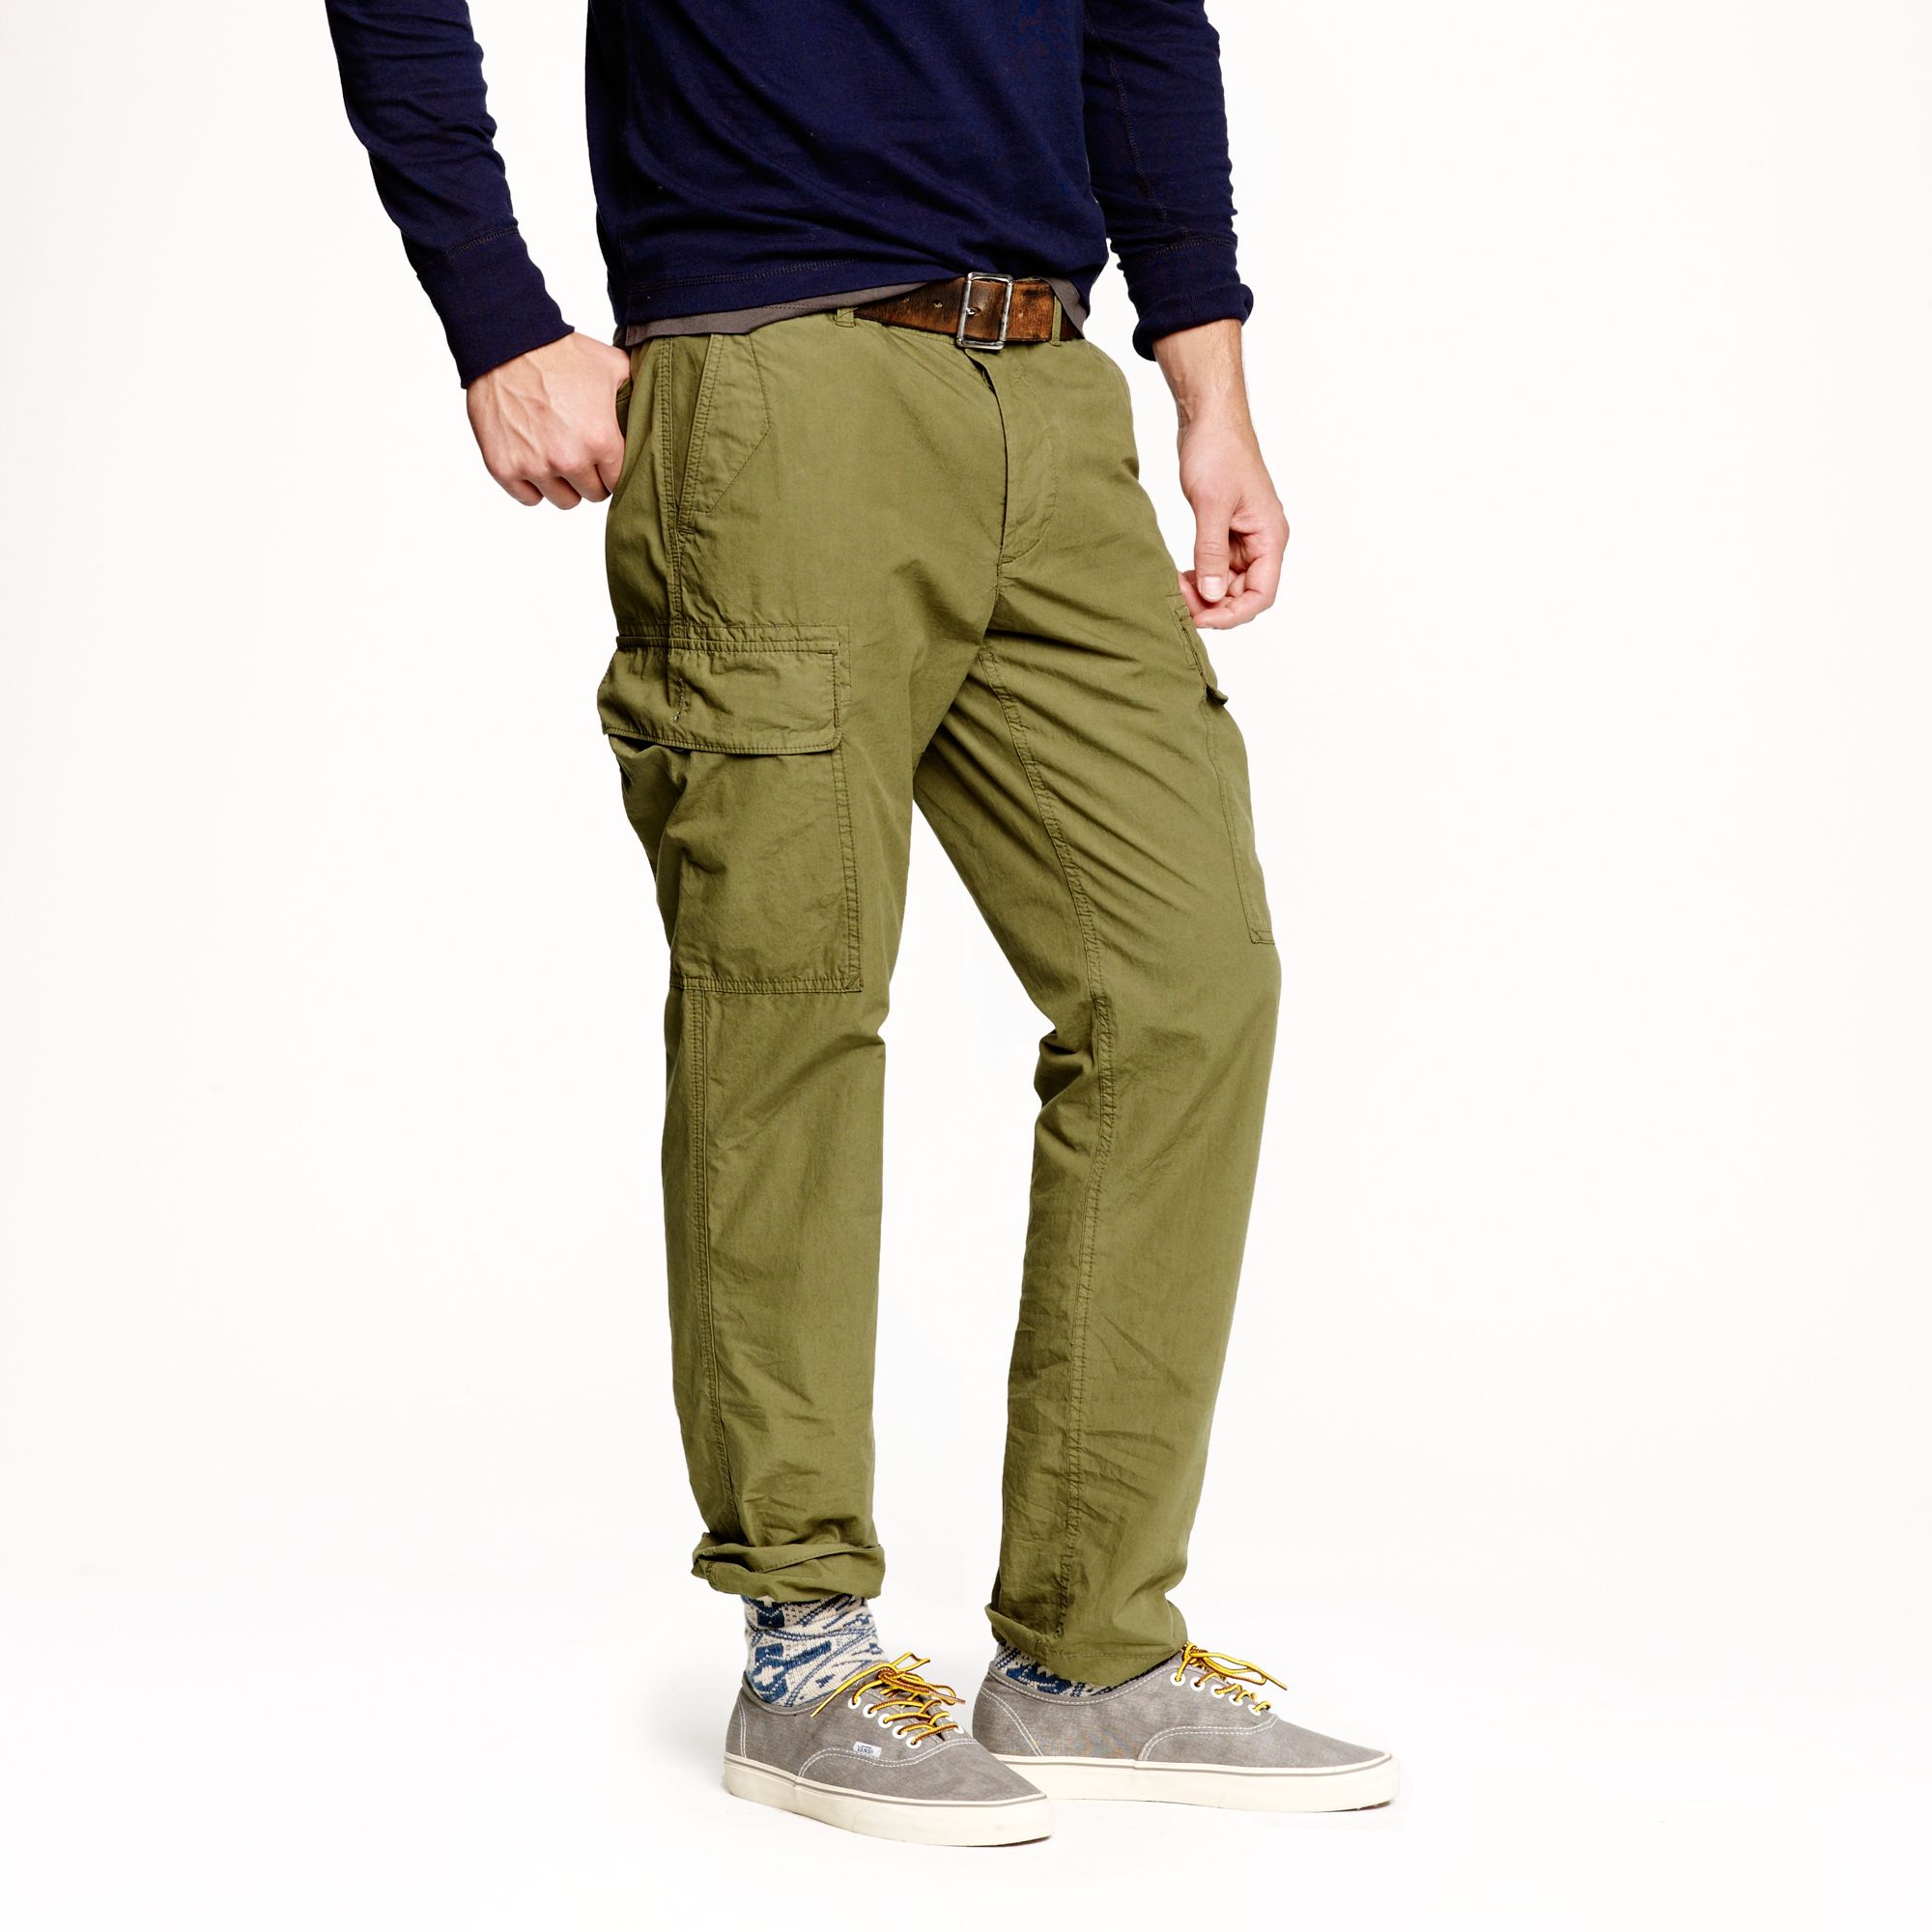 J.Crew Slim Garment Dyed Cargo Pant in Green for Men - Lyst